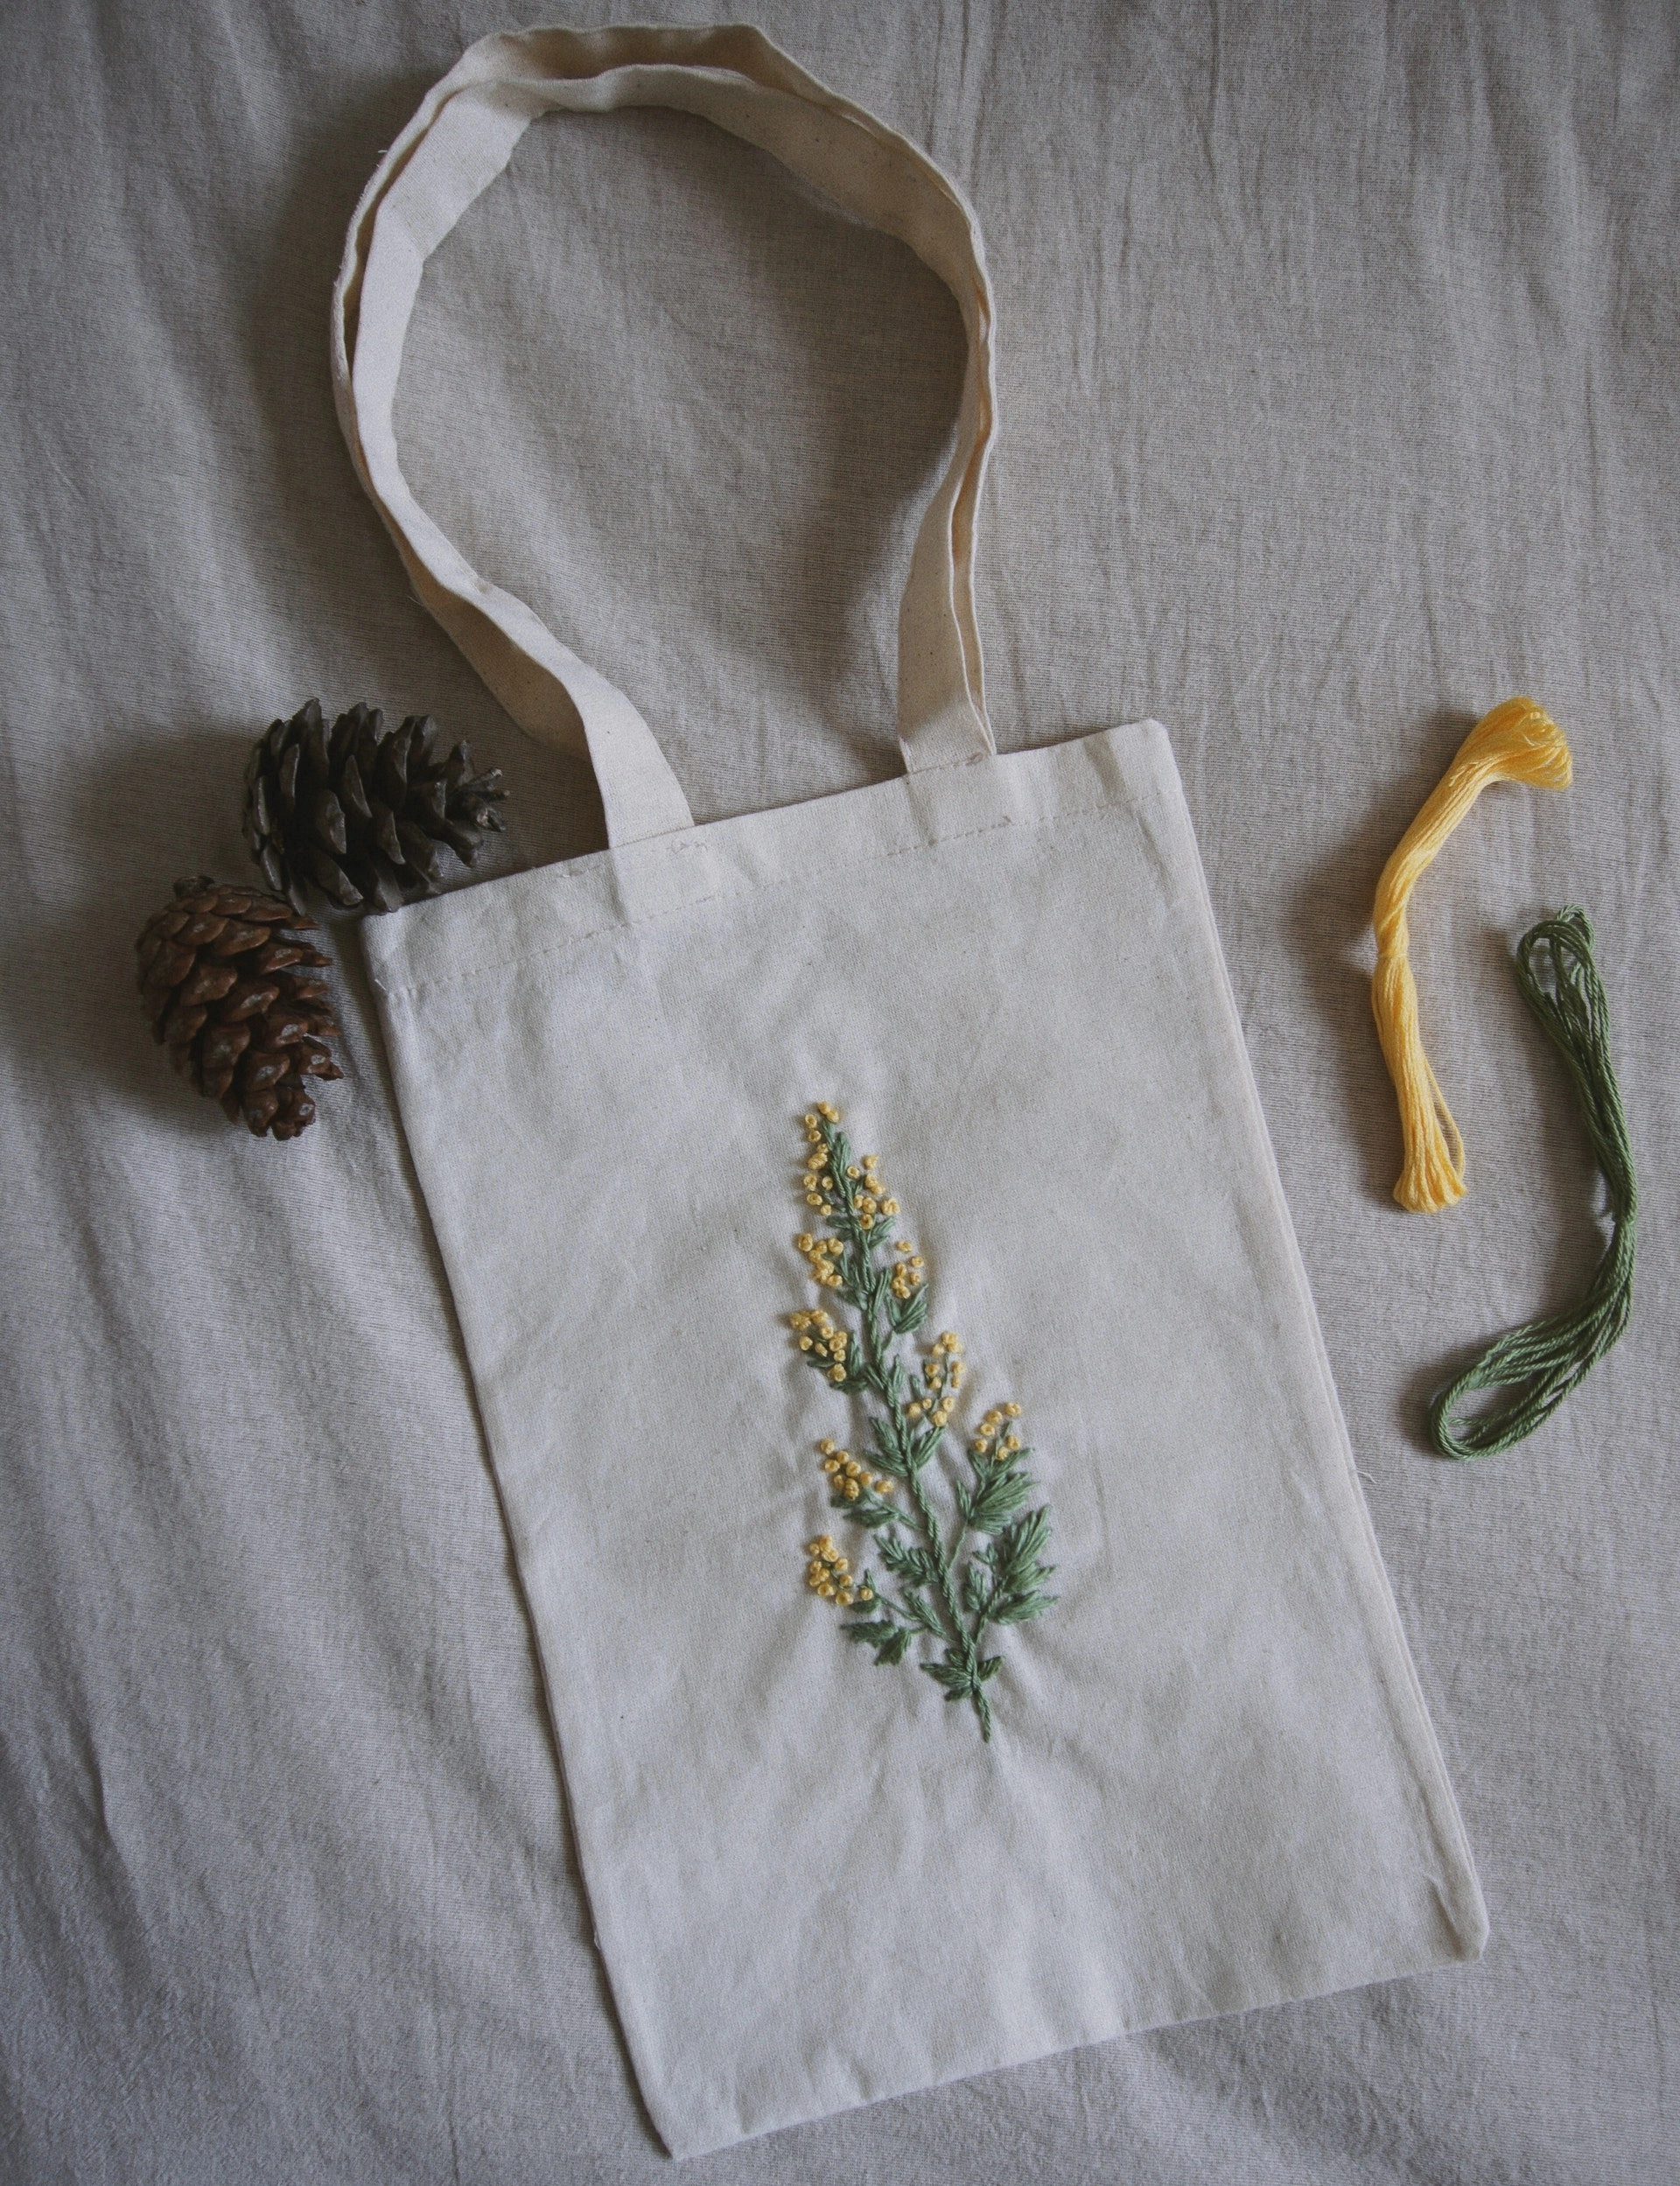 Embroidered cloth bag